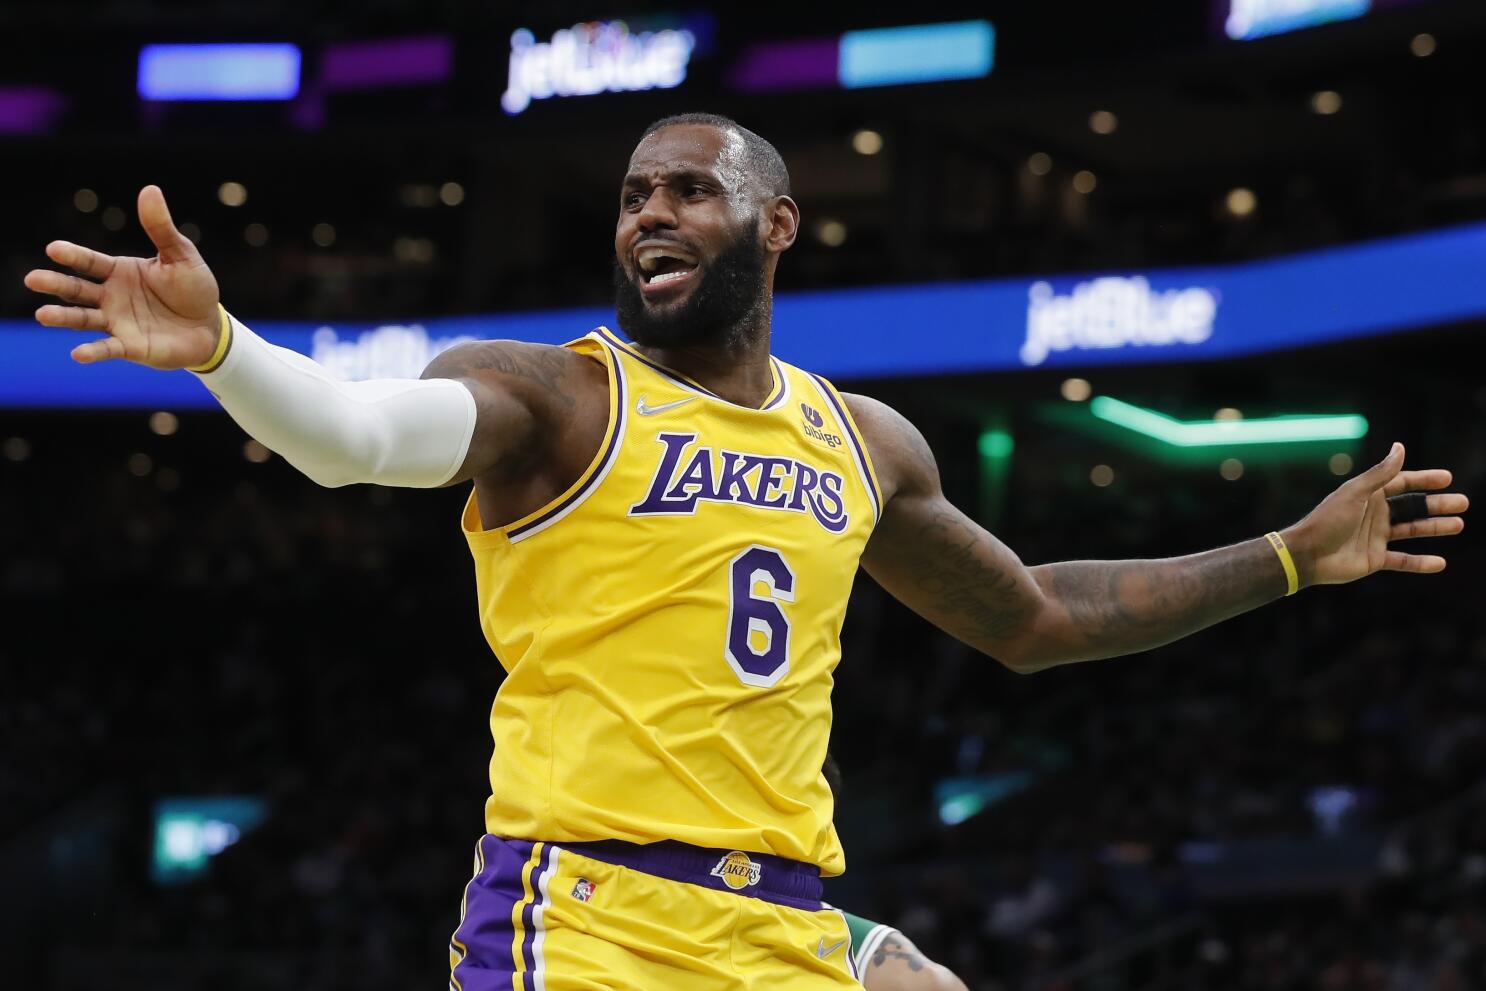 Lakers vs. Mavericks Final Score: L.A. pulls off comeback, beat